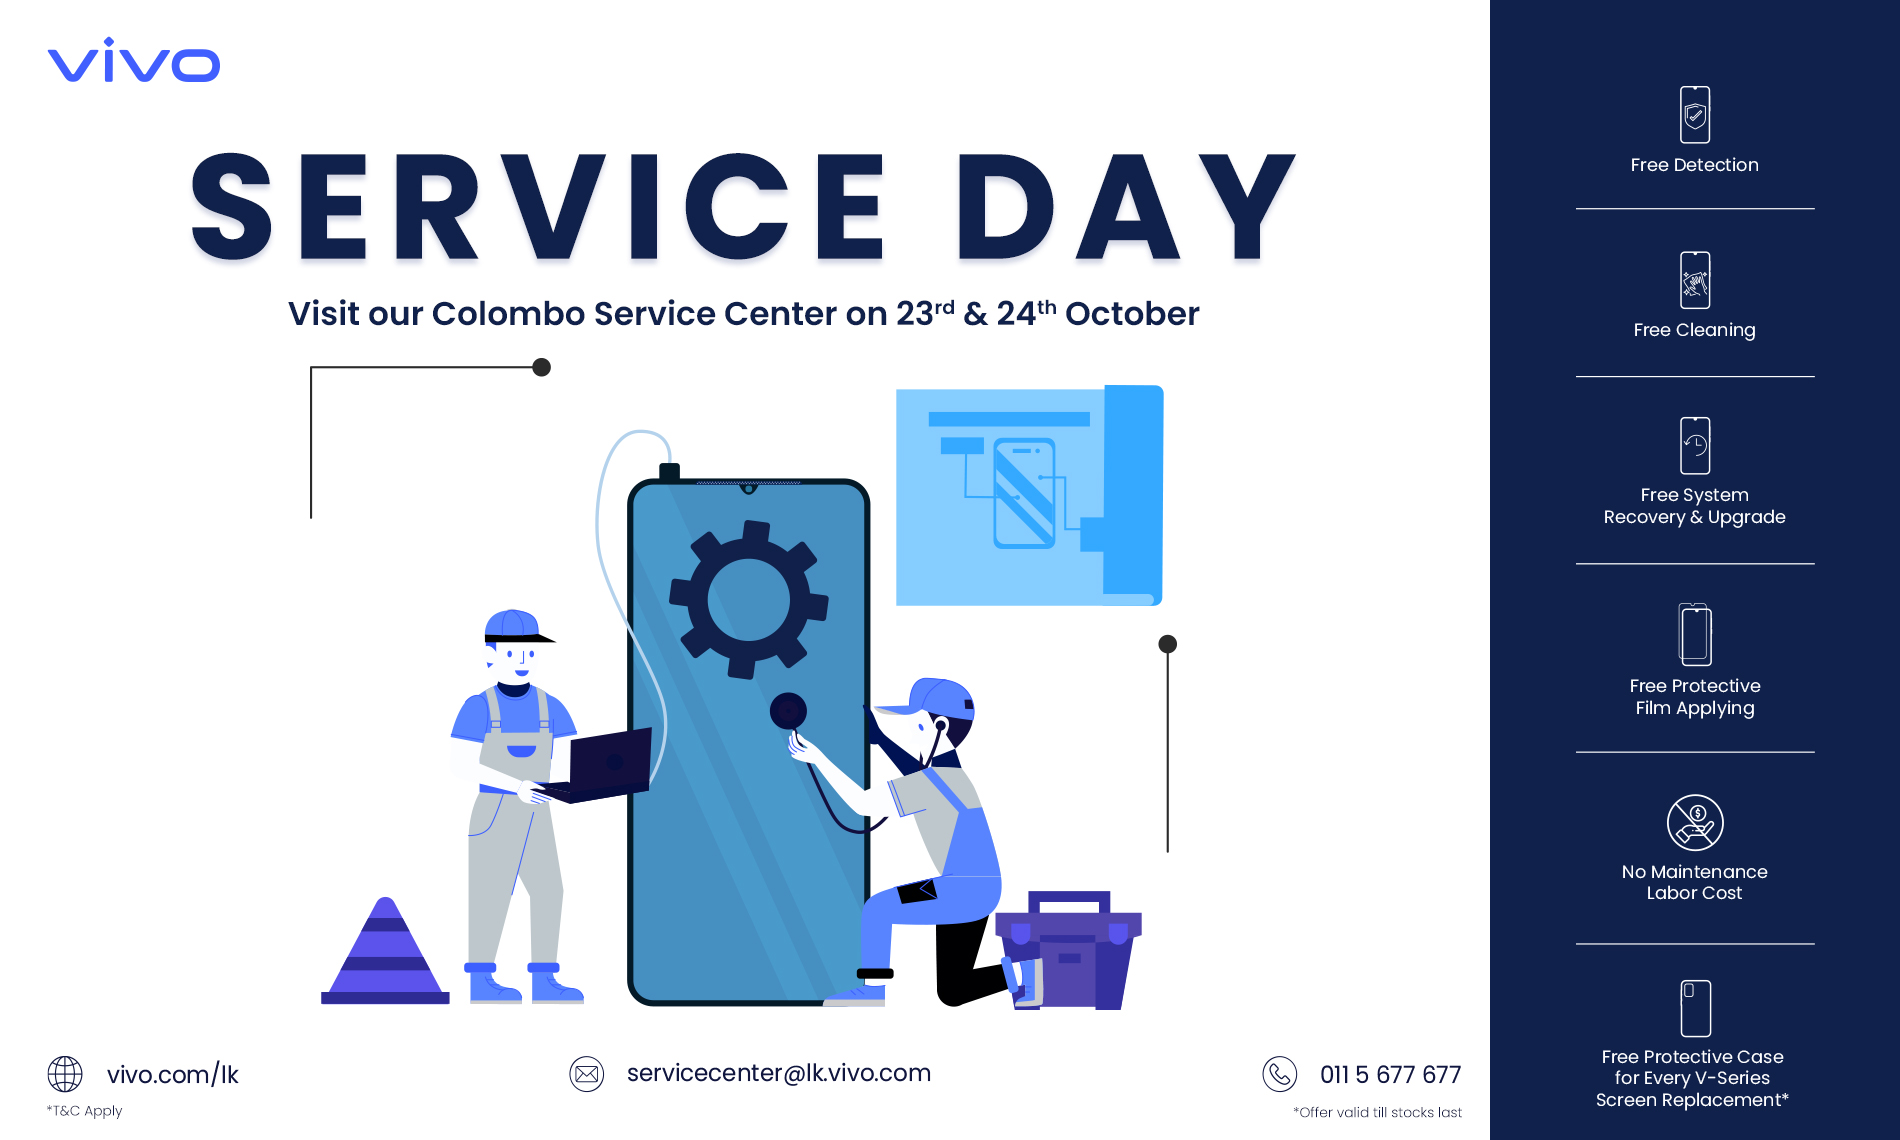 vivo Service Day Benefits in October